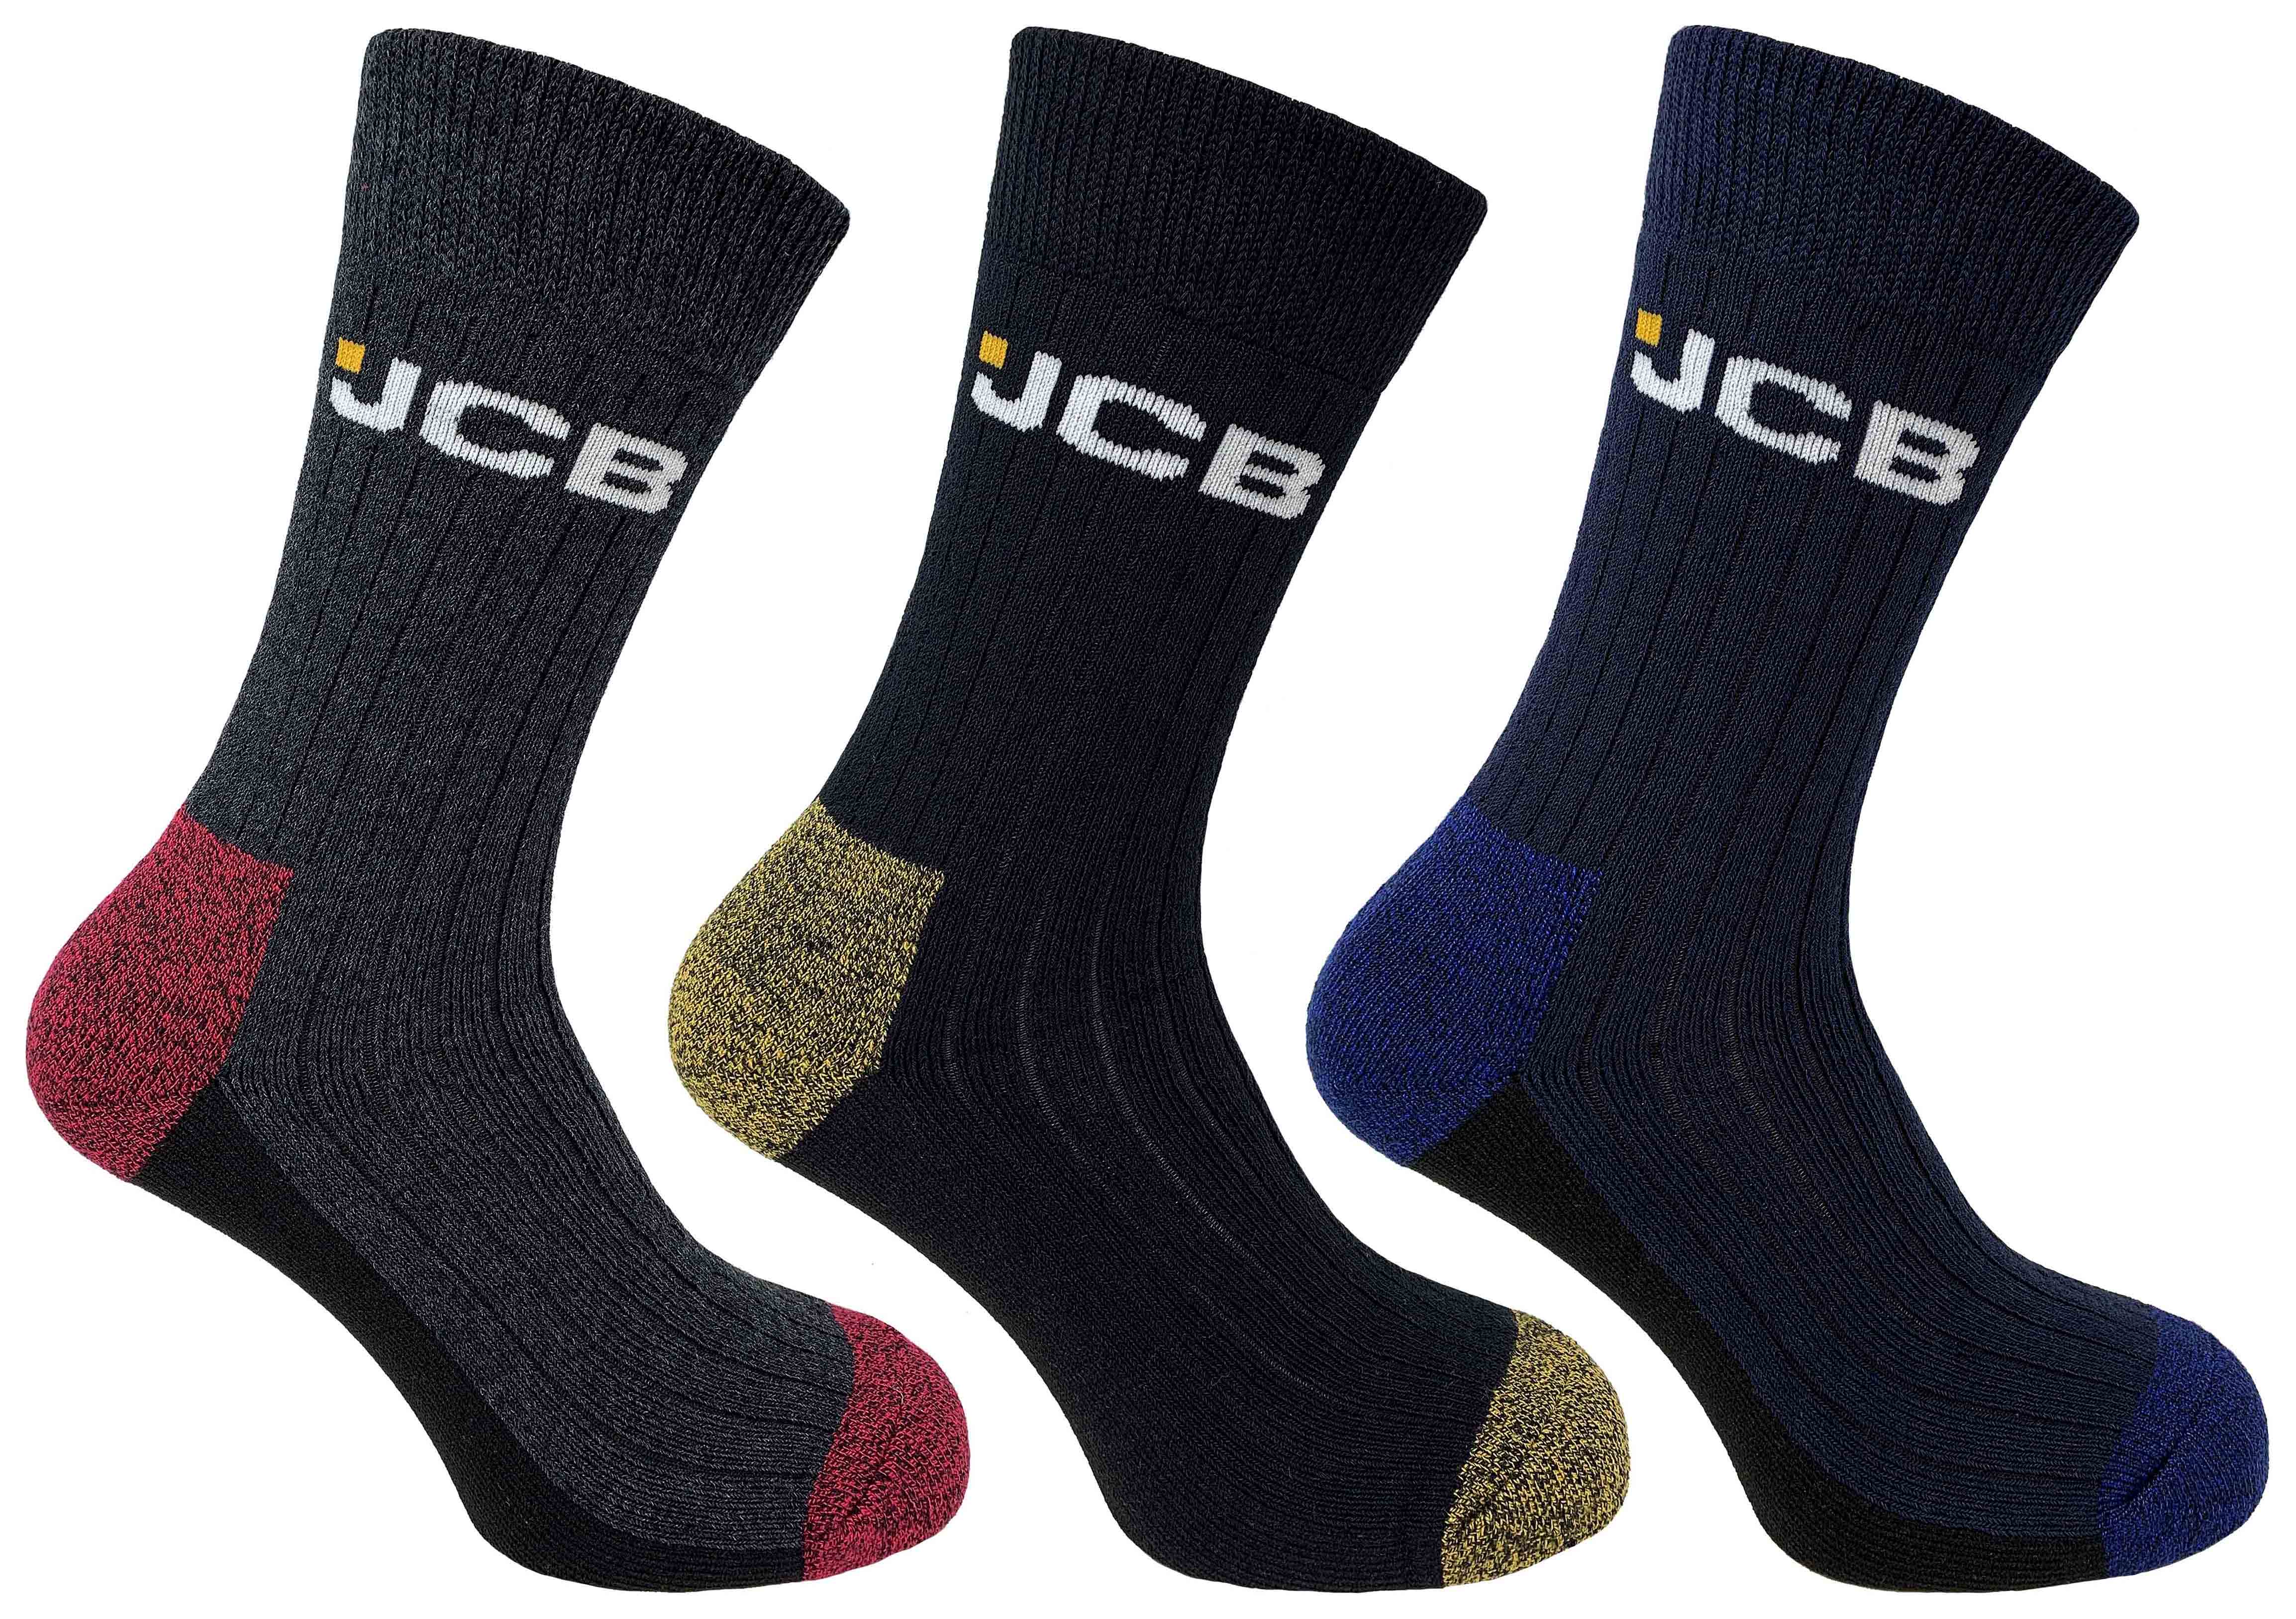 JCB JCBX000083 Boot Socks Pack of 3 Size 6 - 11